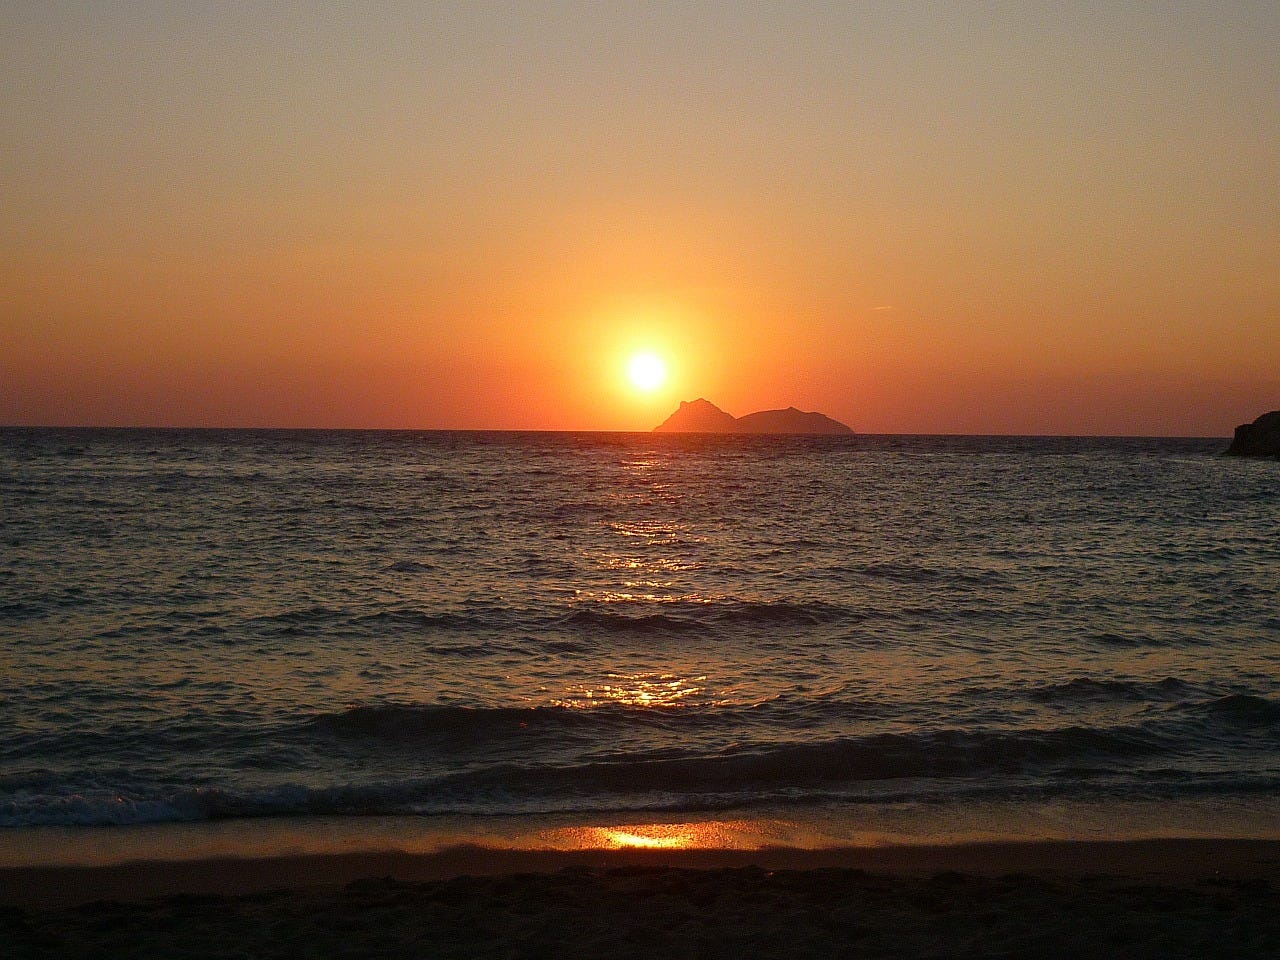 Sunset over the sea at Hagia Galina, Crete